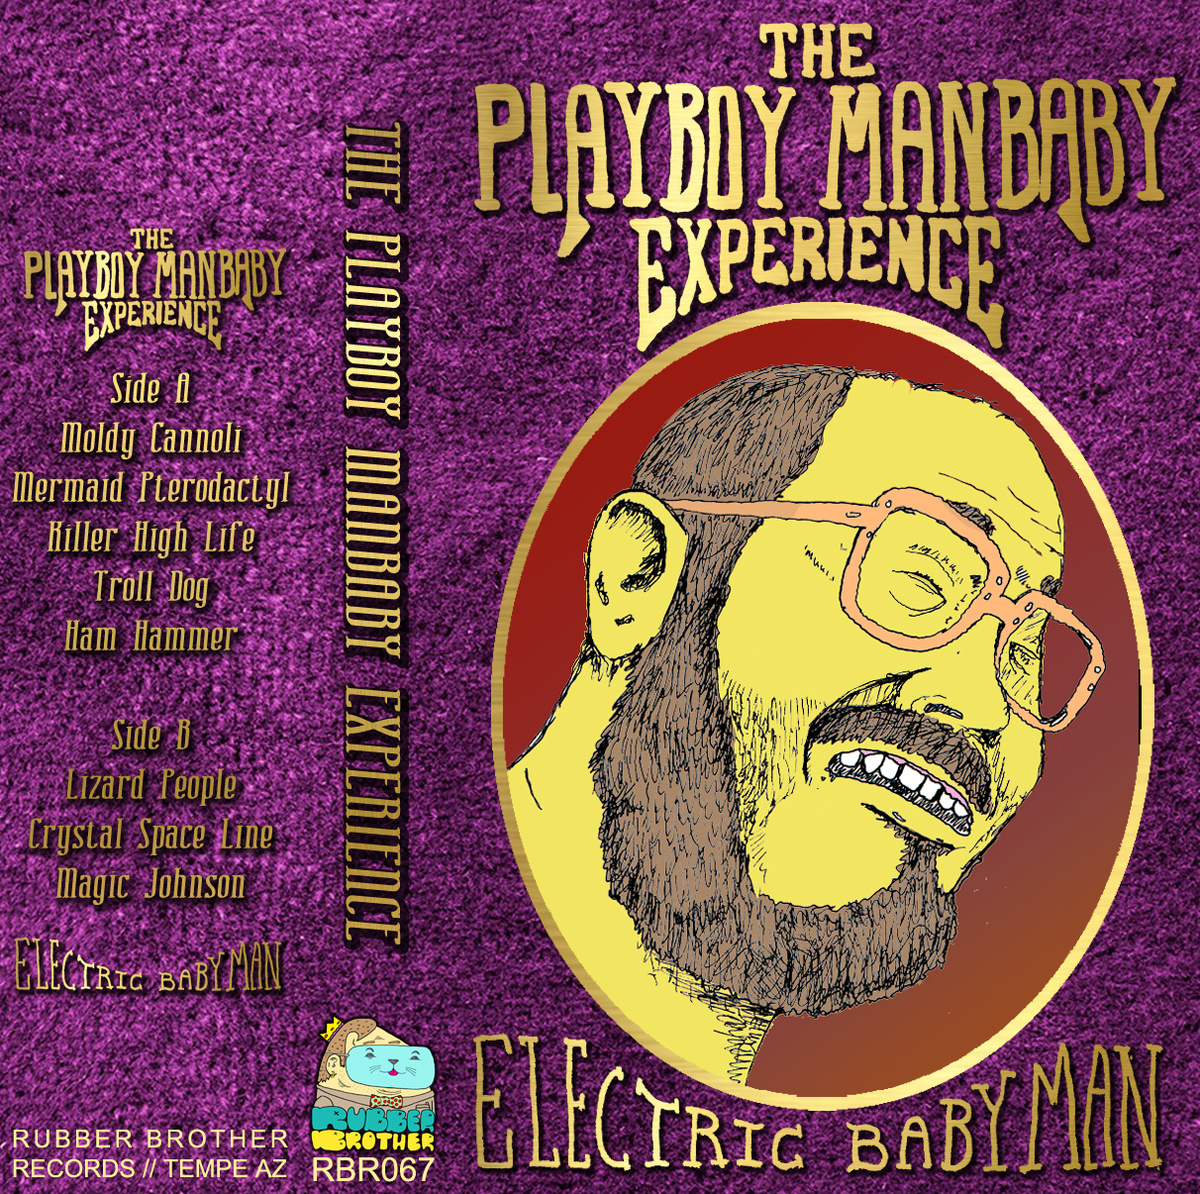 Playboy Manbaby- Electric Babyman Cassette Tape